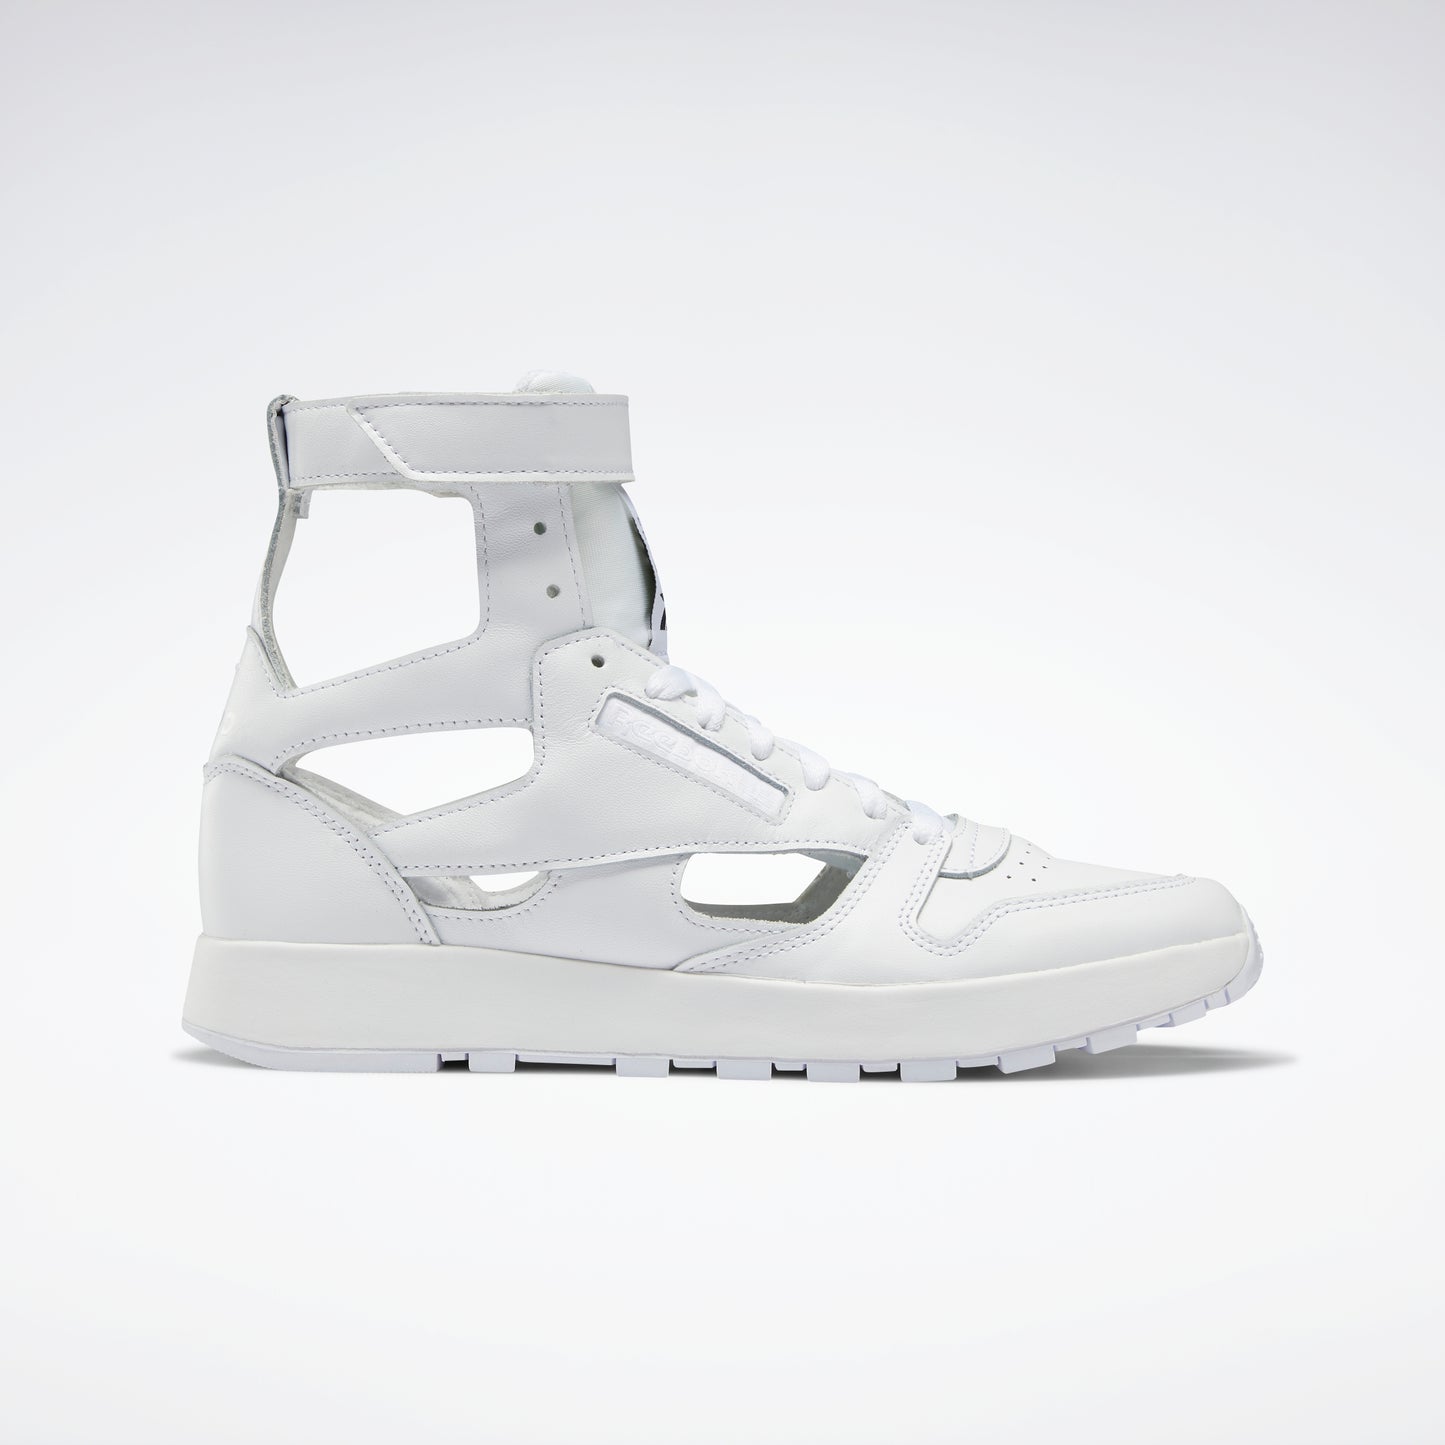 Reebok Footwear Men Maison Margiela Classic Leather Tabi High Shoes White/Black/White